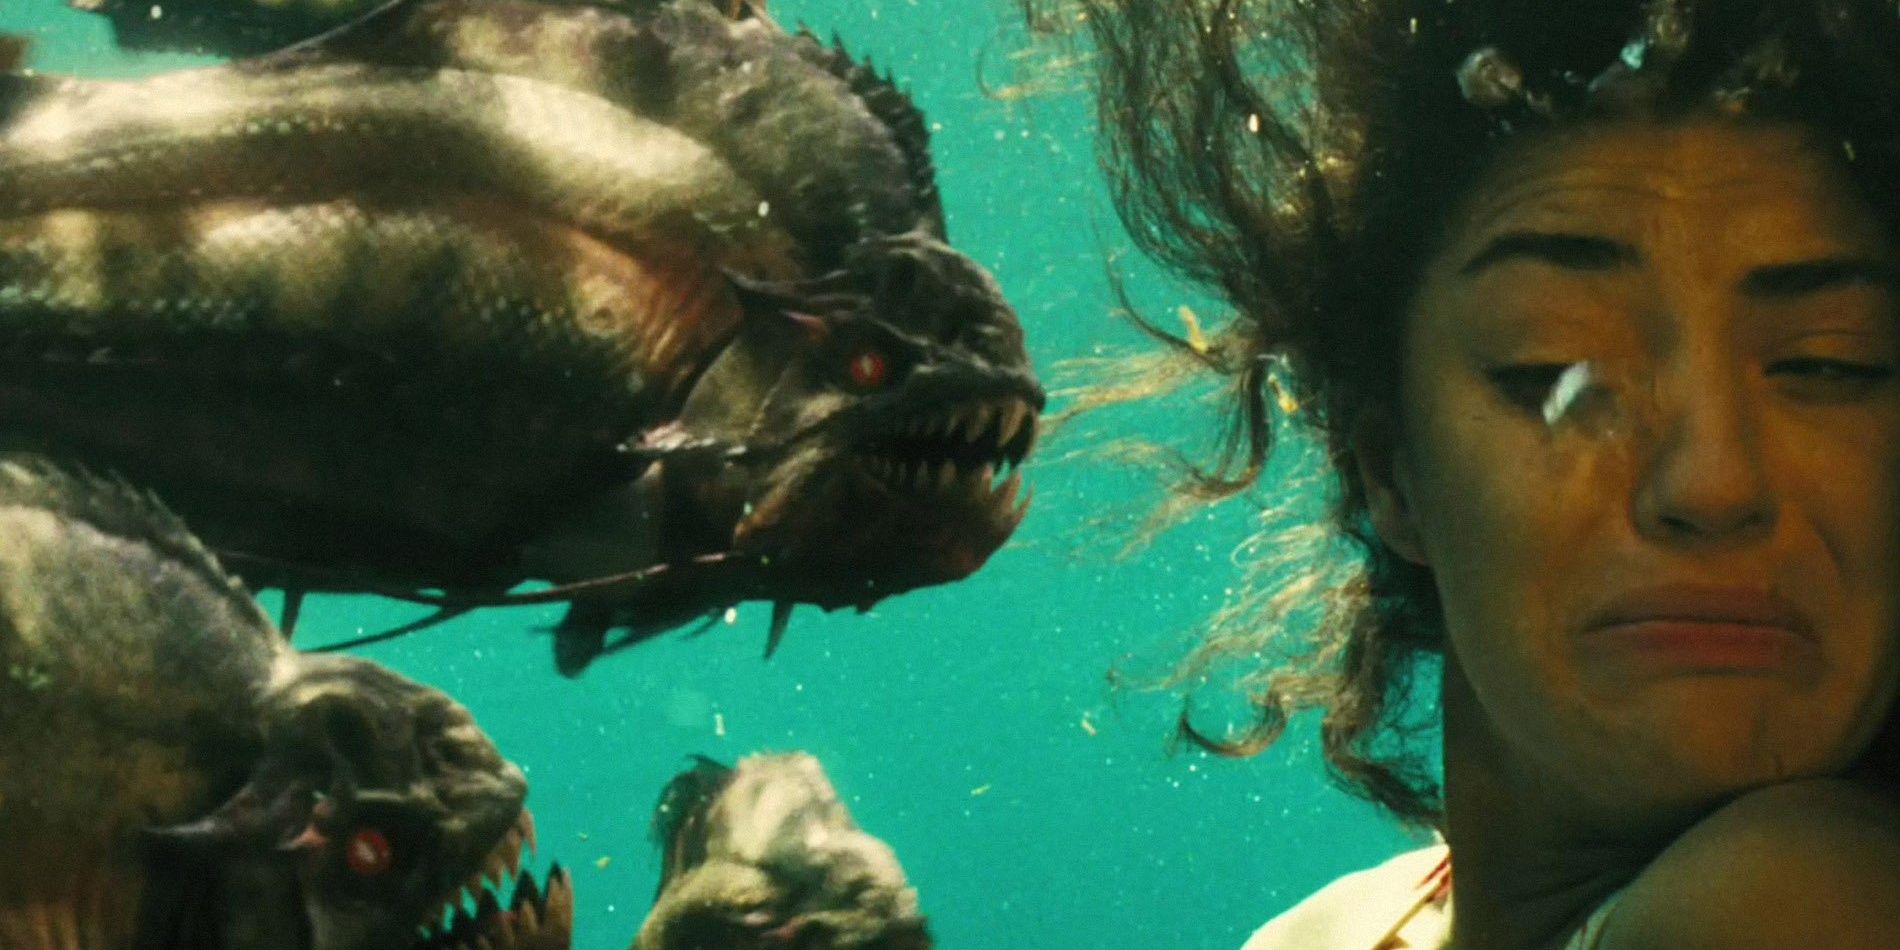 Jessica Szohr comes face to face with piranha in Piranha 3D